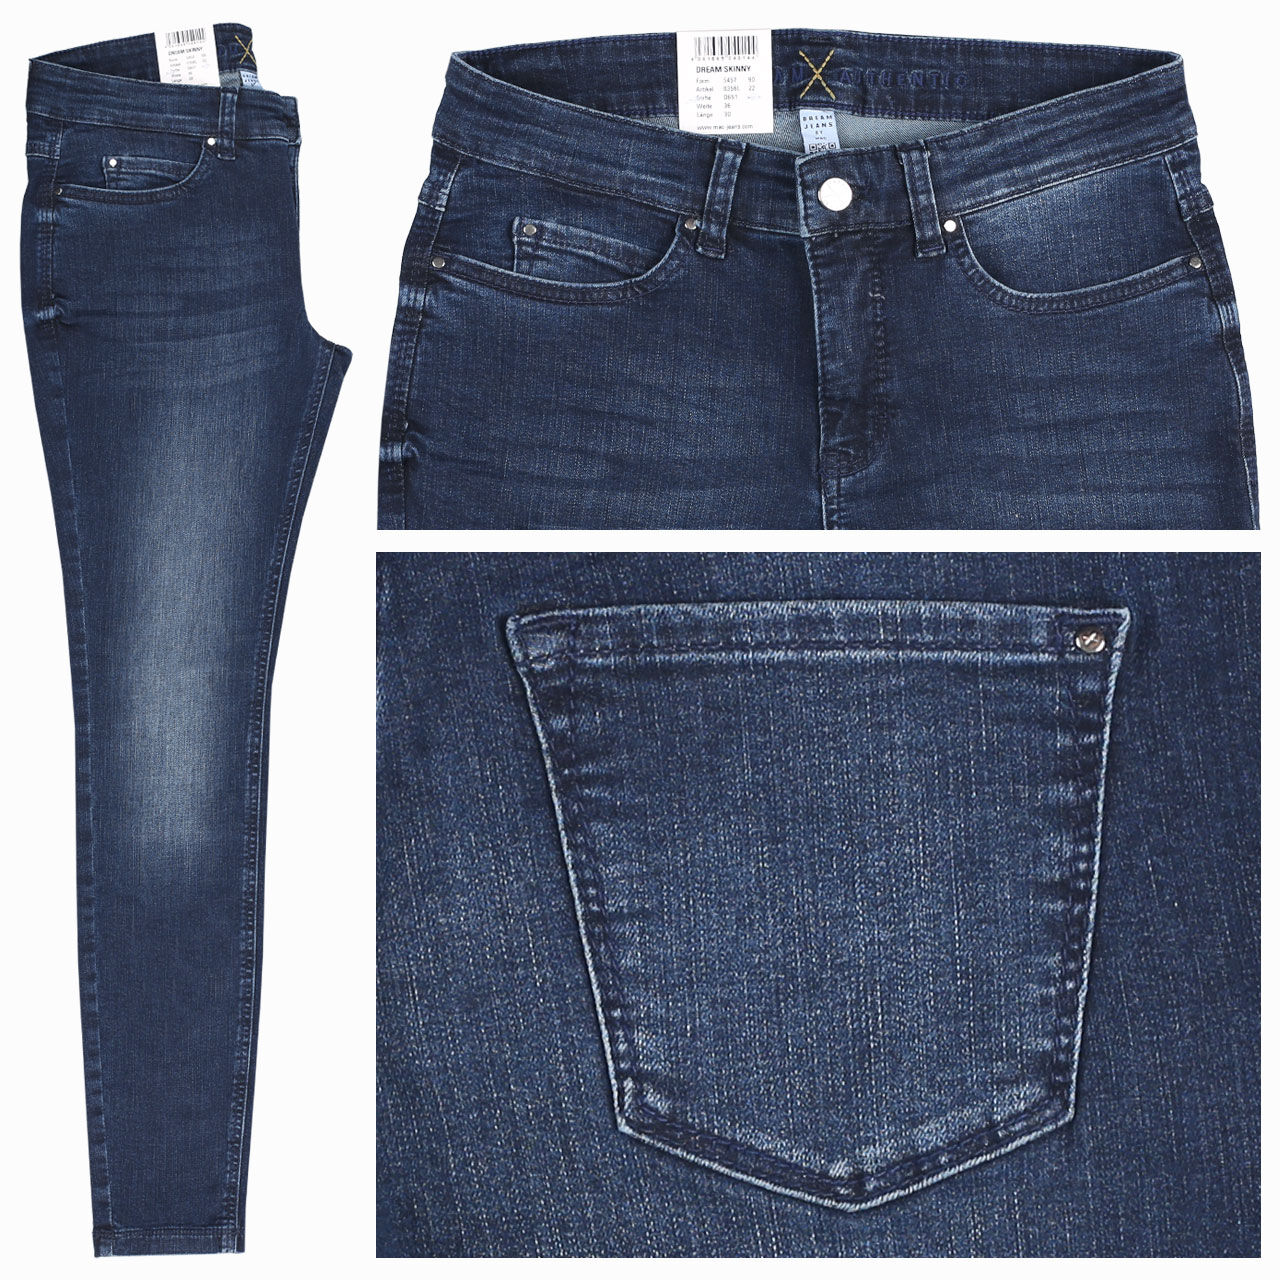 MAC Jeans Dream Skinny für Damen in Tiefblau, FarbNr.: D651